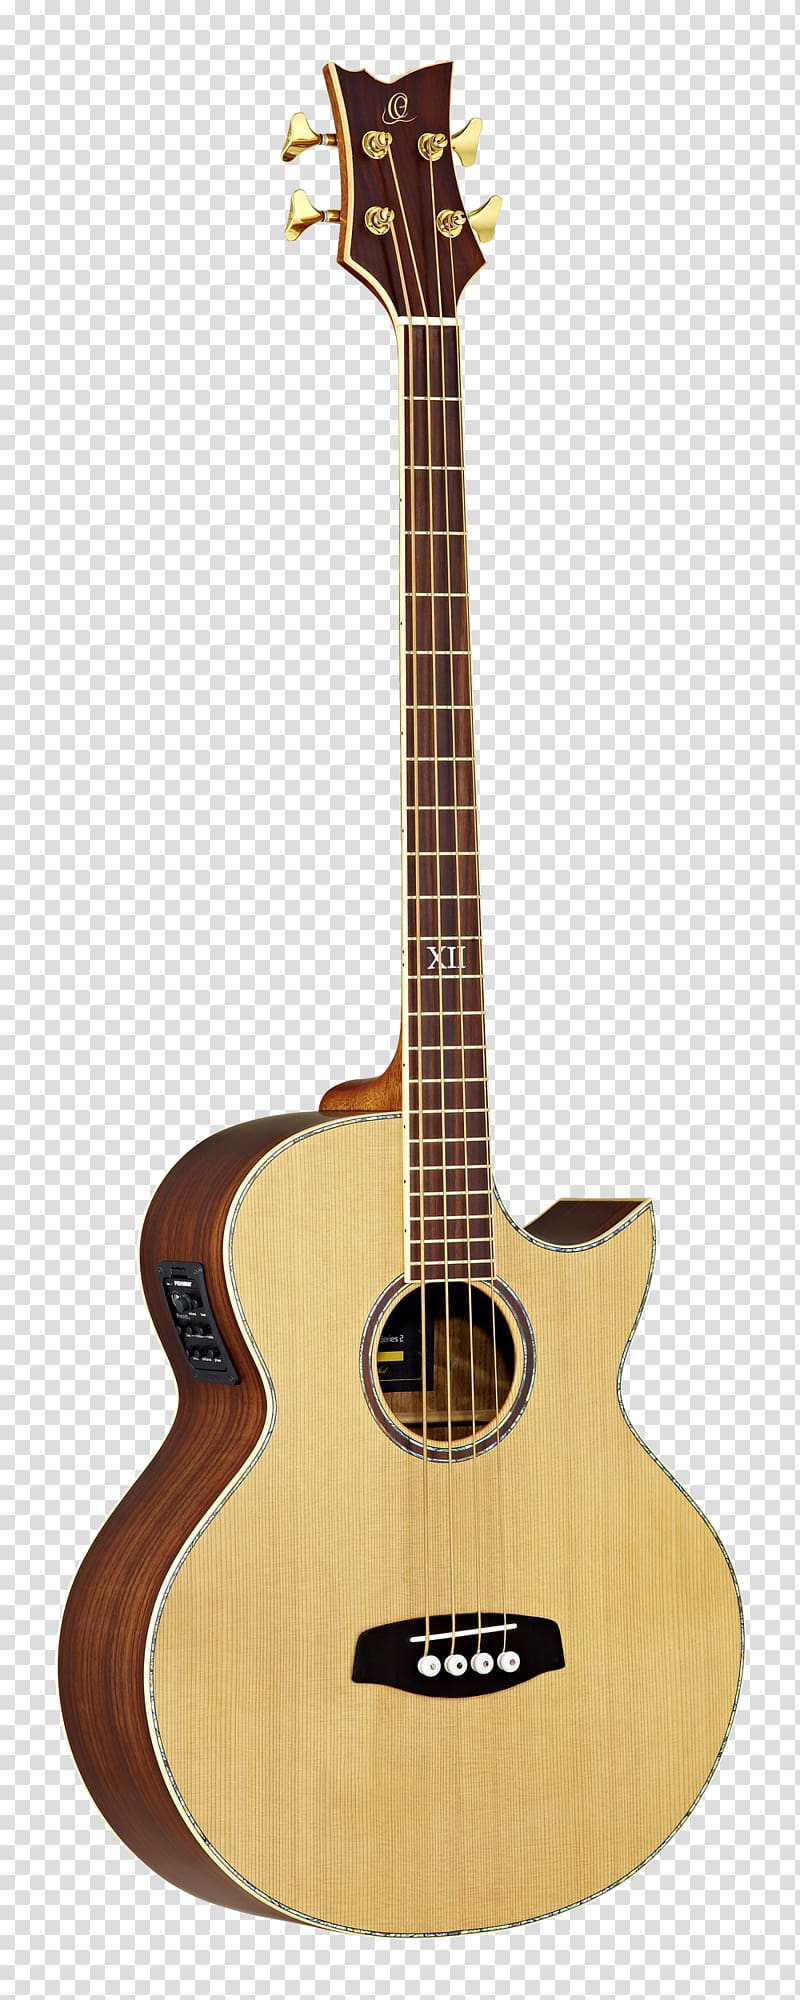 Musical Instruments Acoustic guitar Ukulele Bass guitar, amancio ortega transparent background PNG clipart